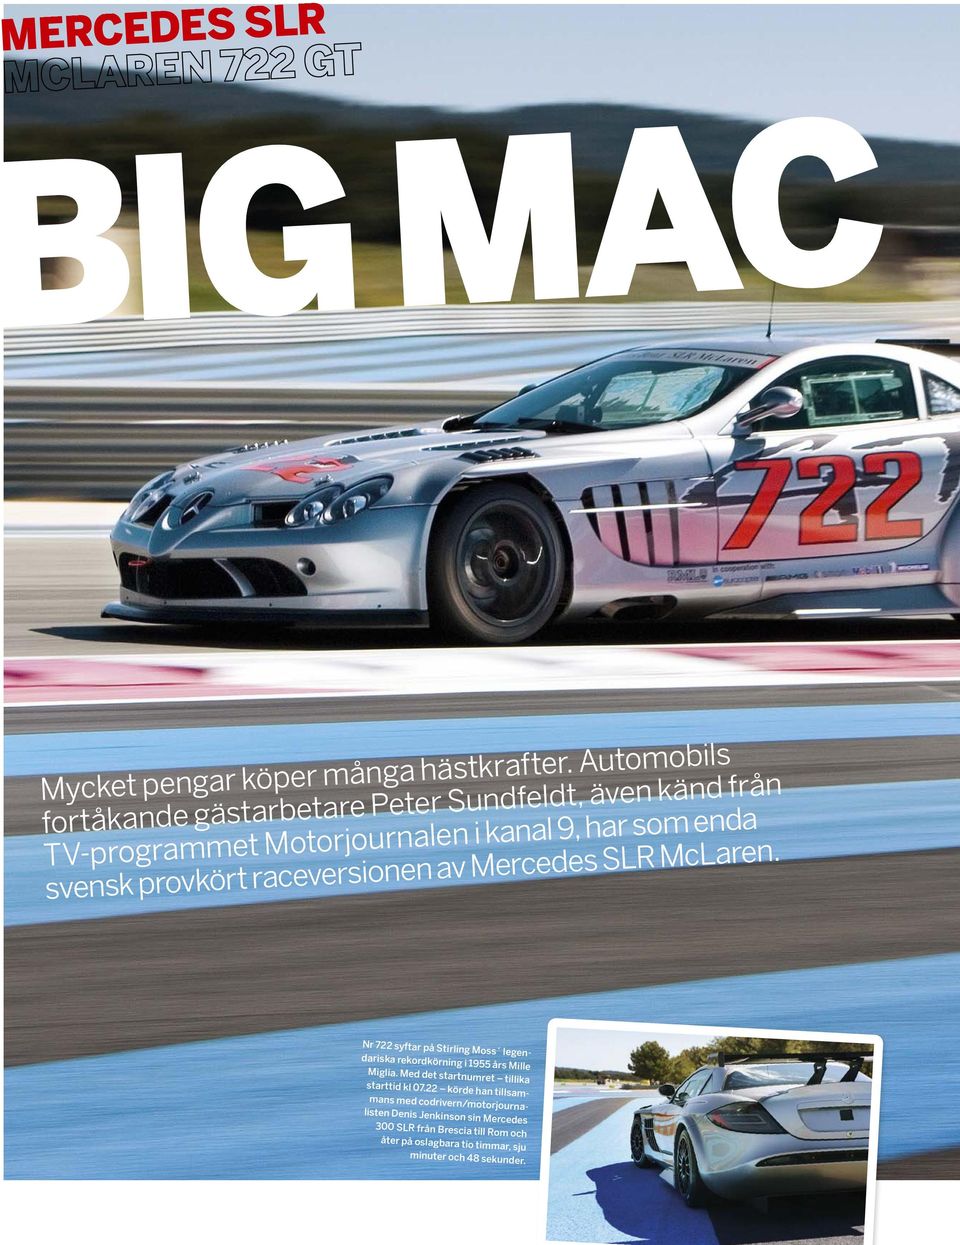 MERCEDES SLR BIG MAC - PDF Free Download